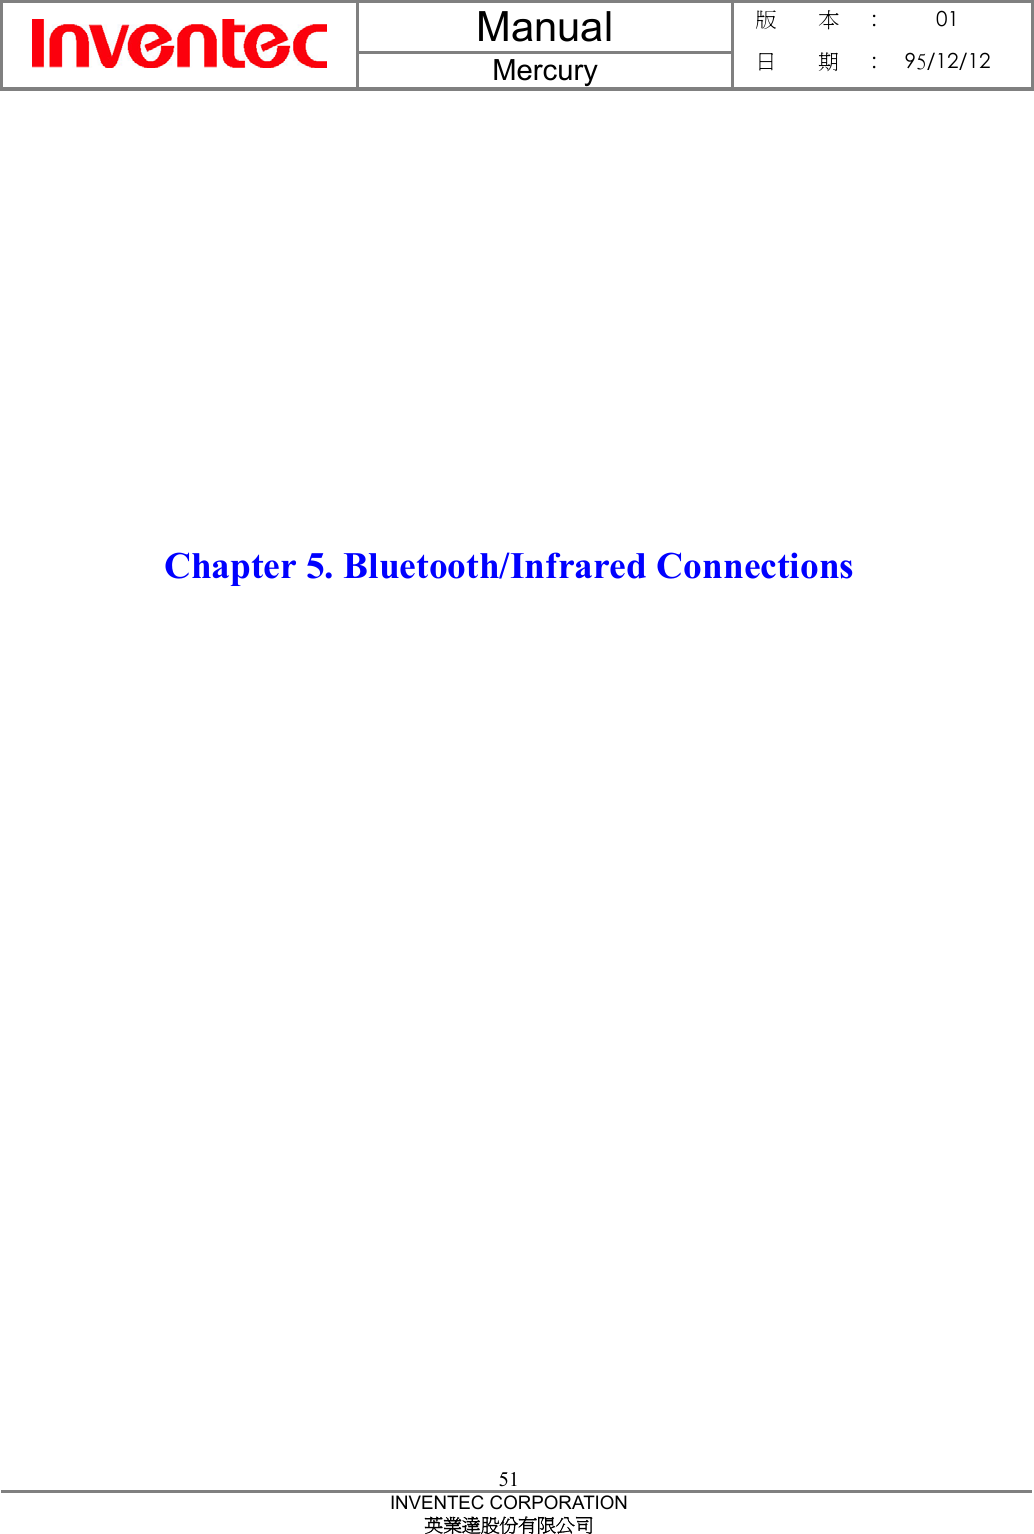 Manual  Mercury 版    本 :  01 日    期 : 95/12/12  51 INVENTEC CORPORATION 英業達股份有限公司             Chapter 5. Bluetooth/Infrared Connections 